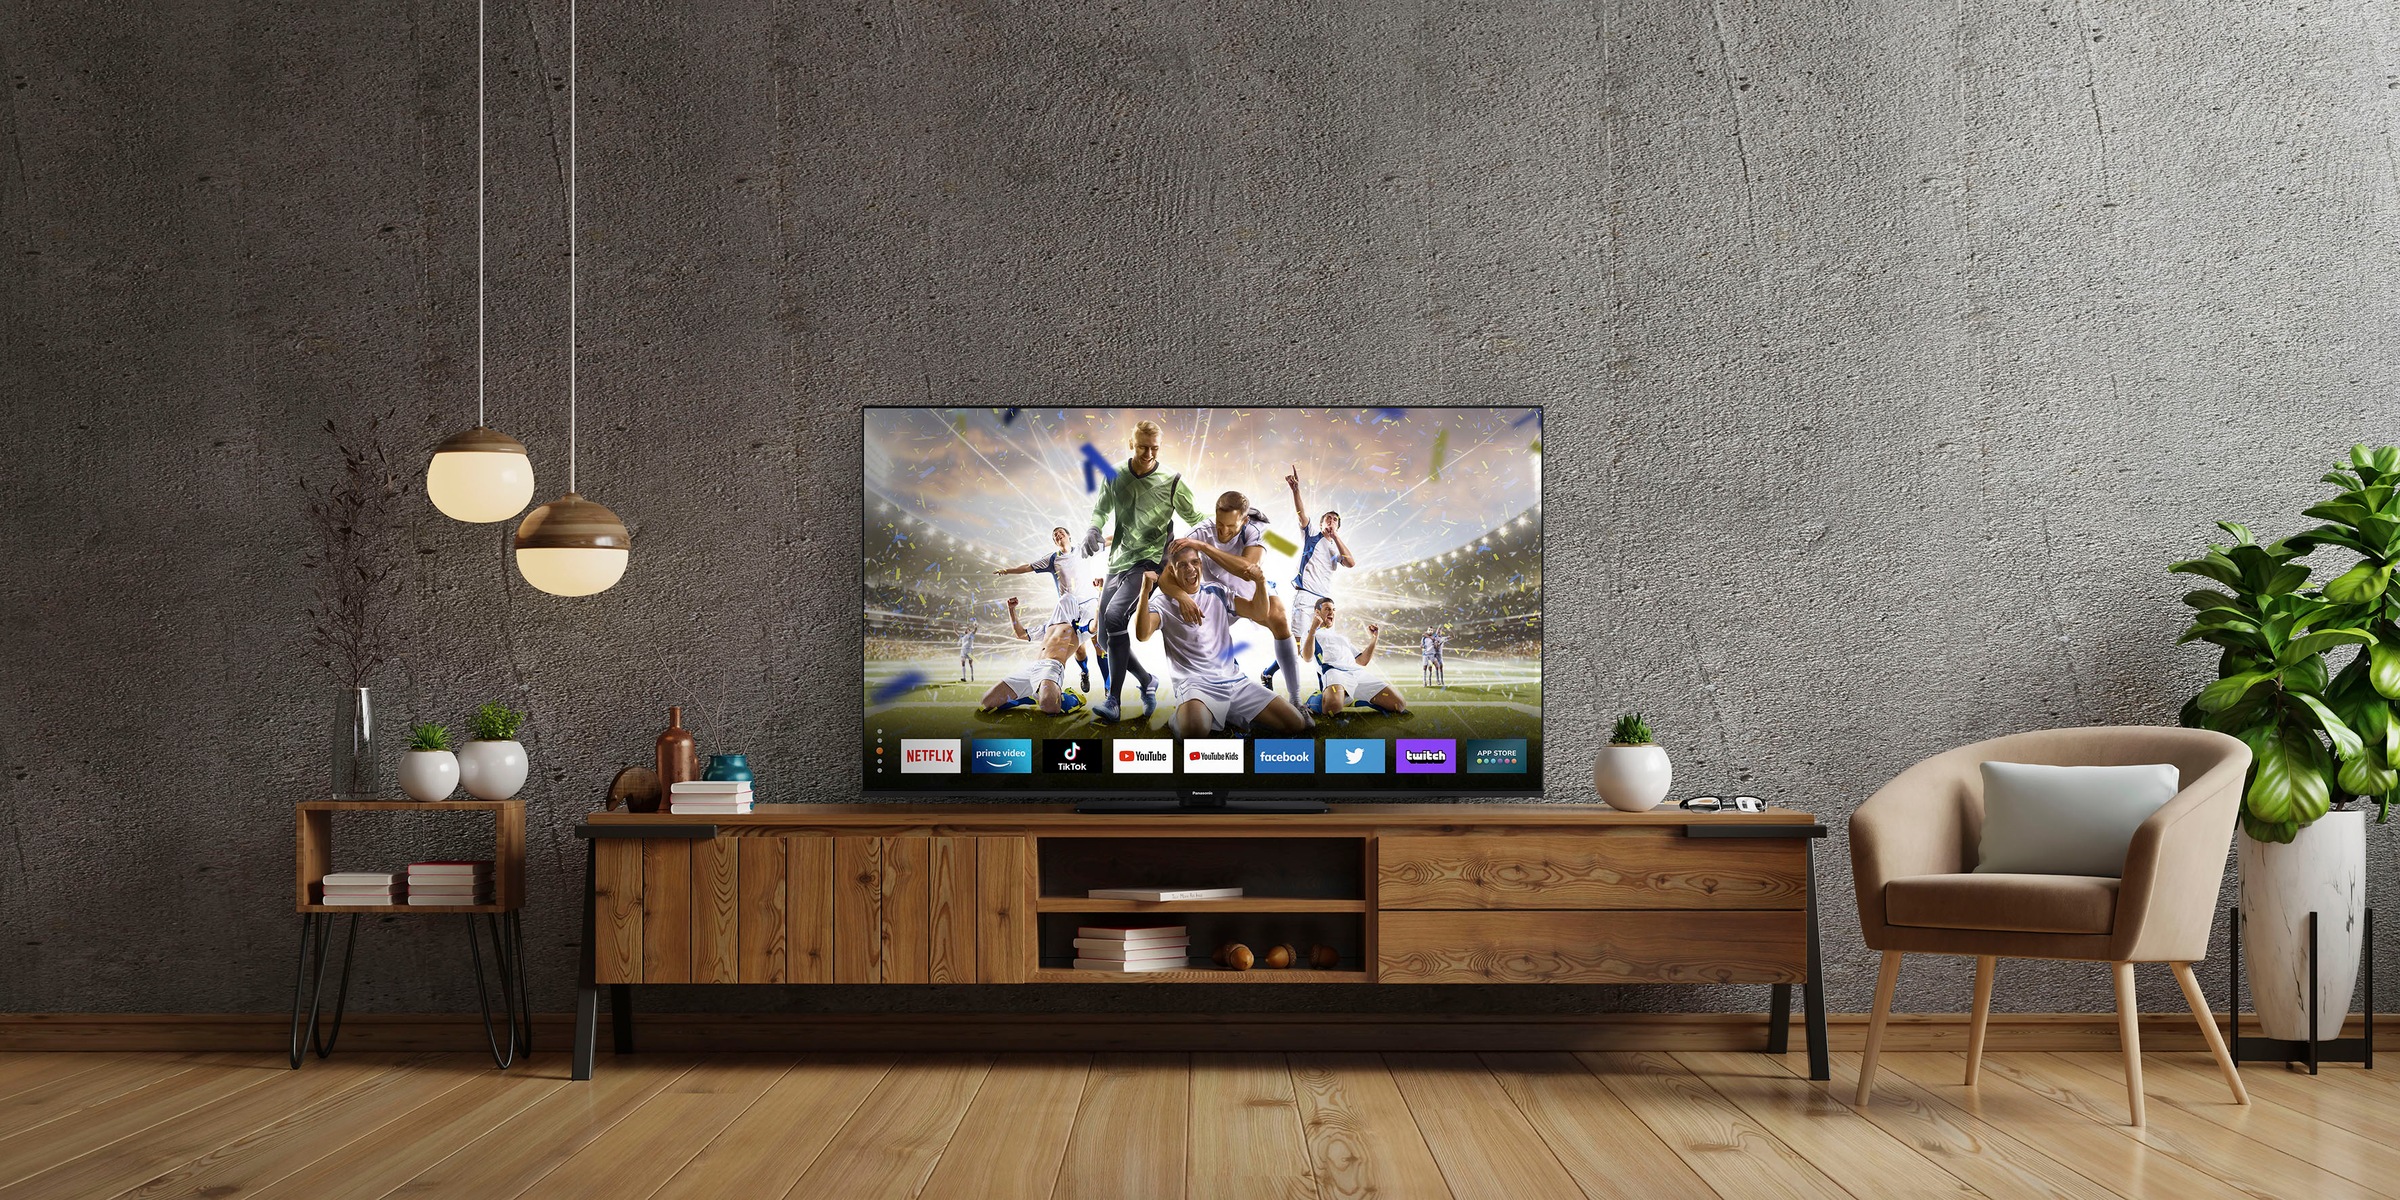 Panasonic LED-Fernseher, 139 cm/55 Zoll, 4K Ultra HD, Smart-TV